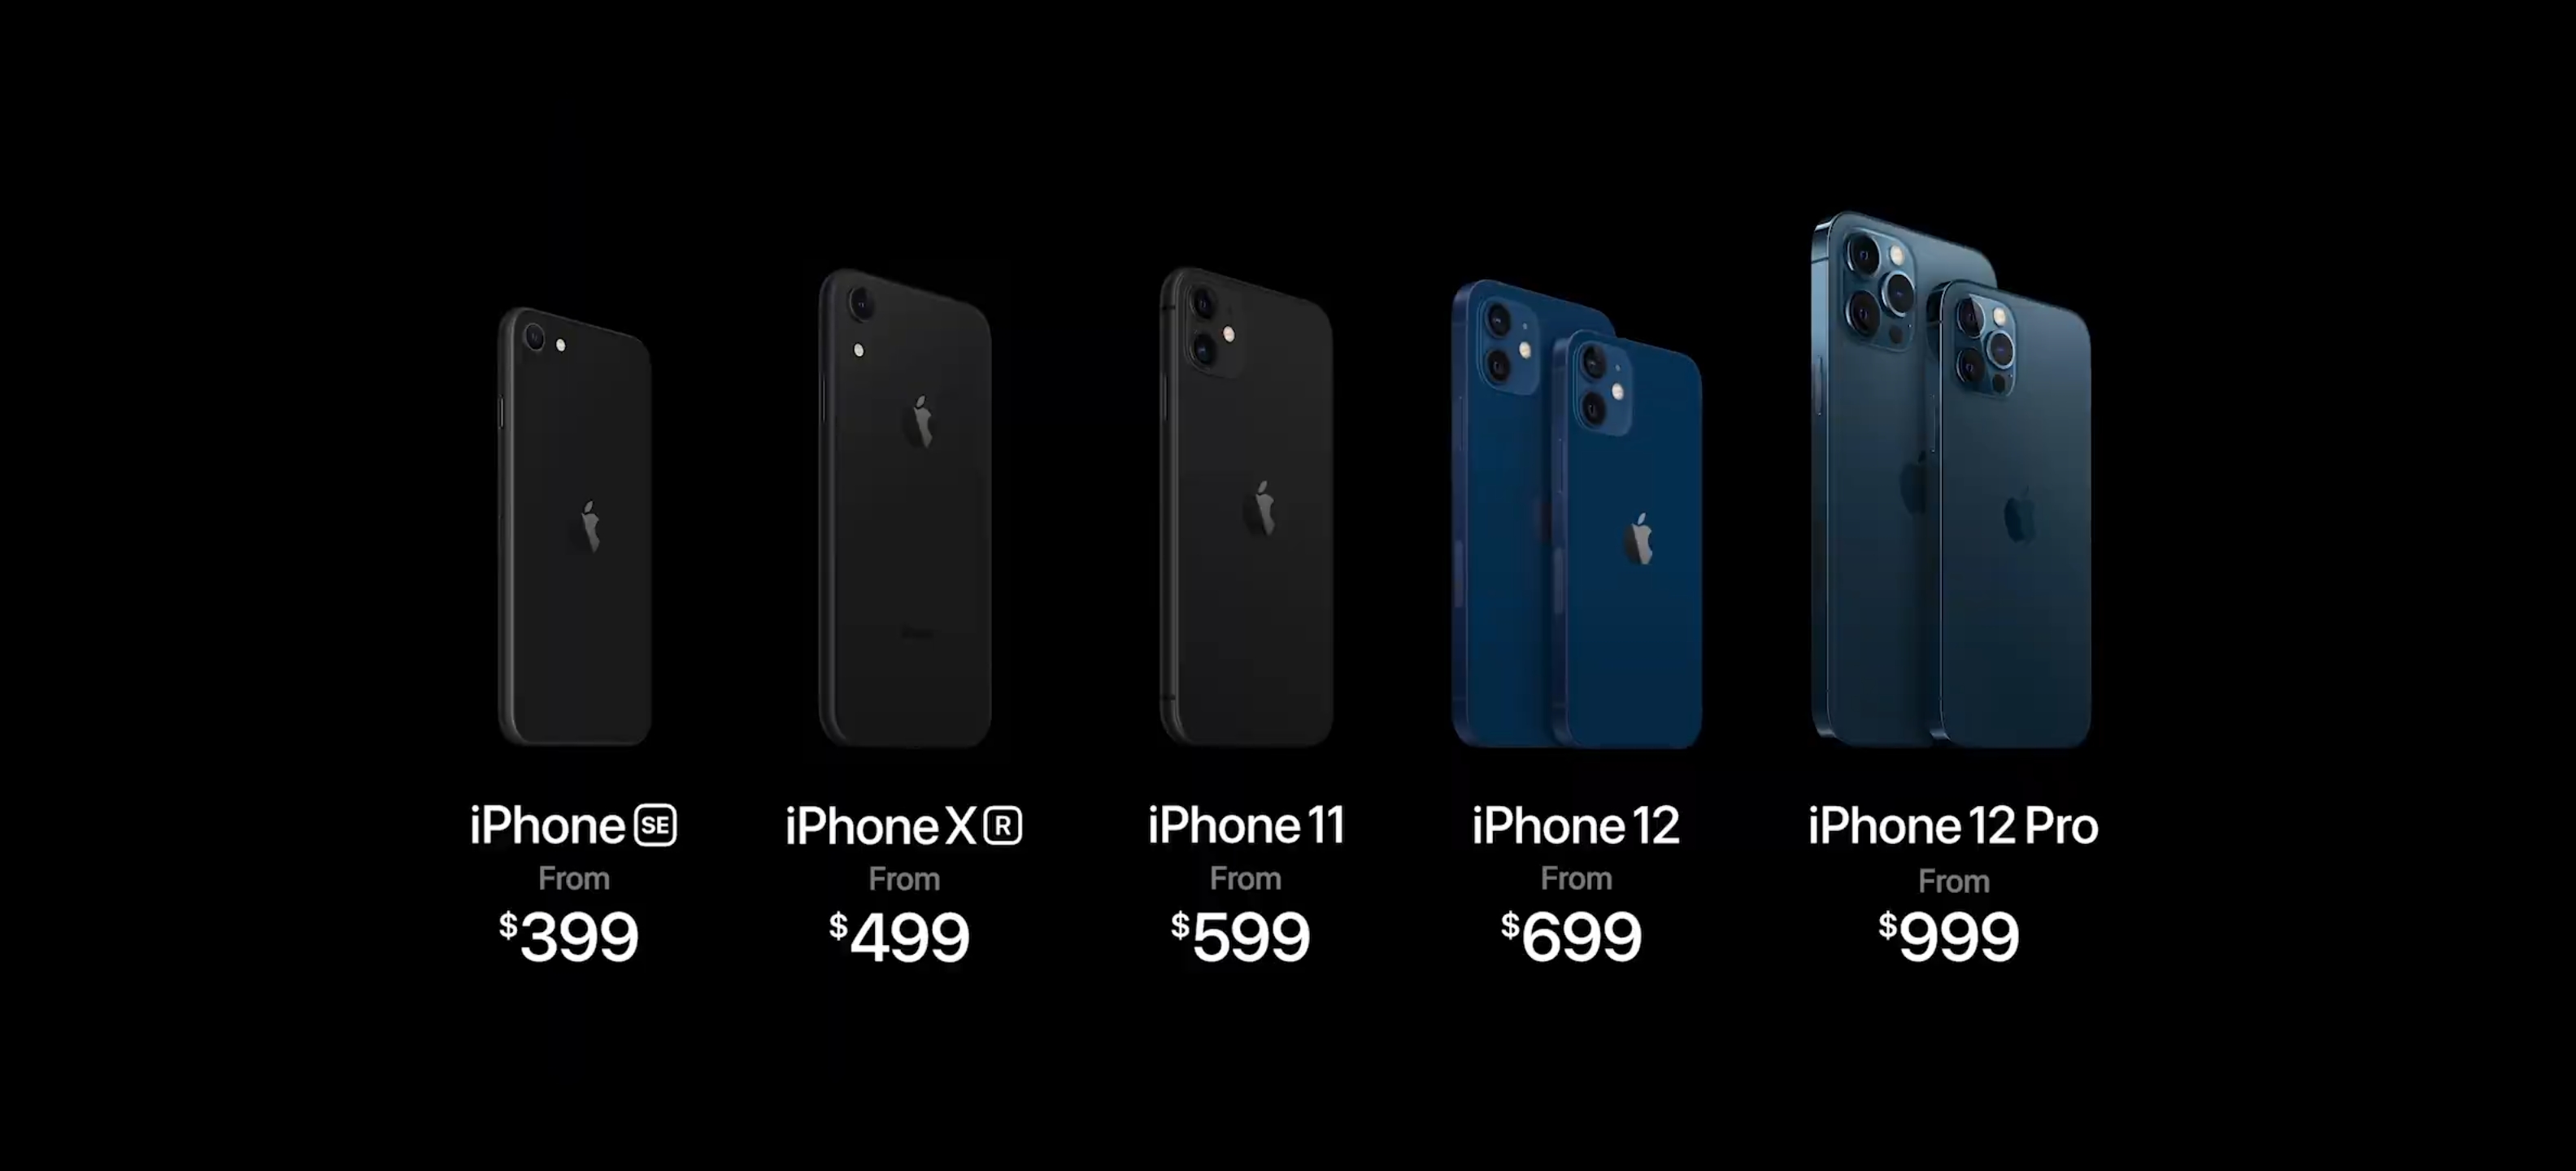 Apple iPhone 12 Prices